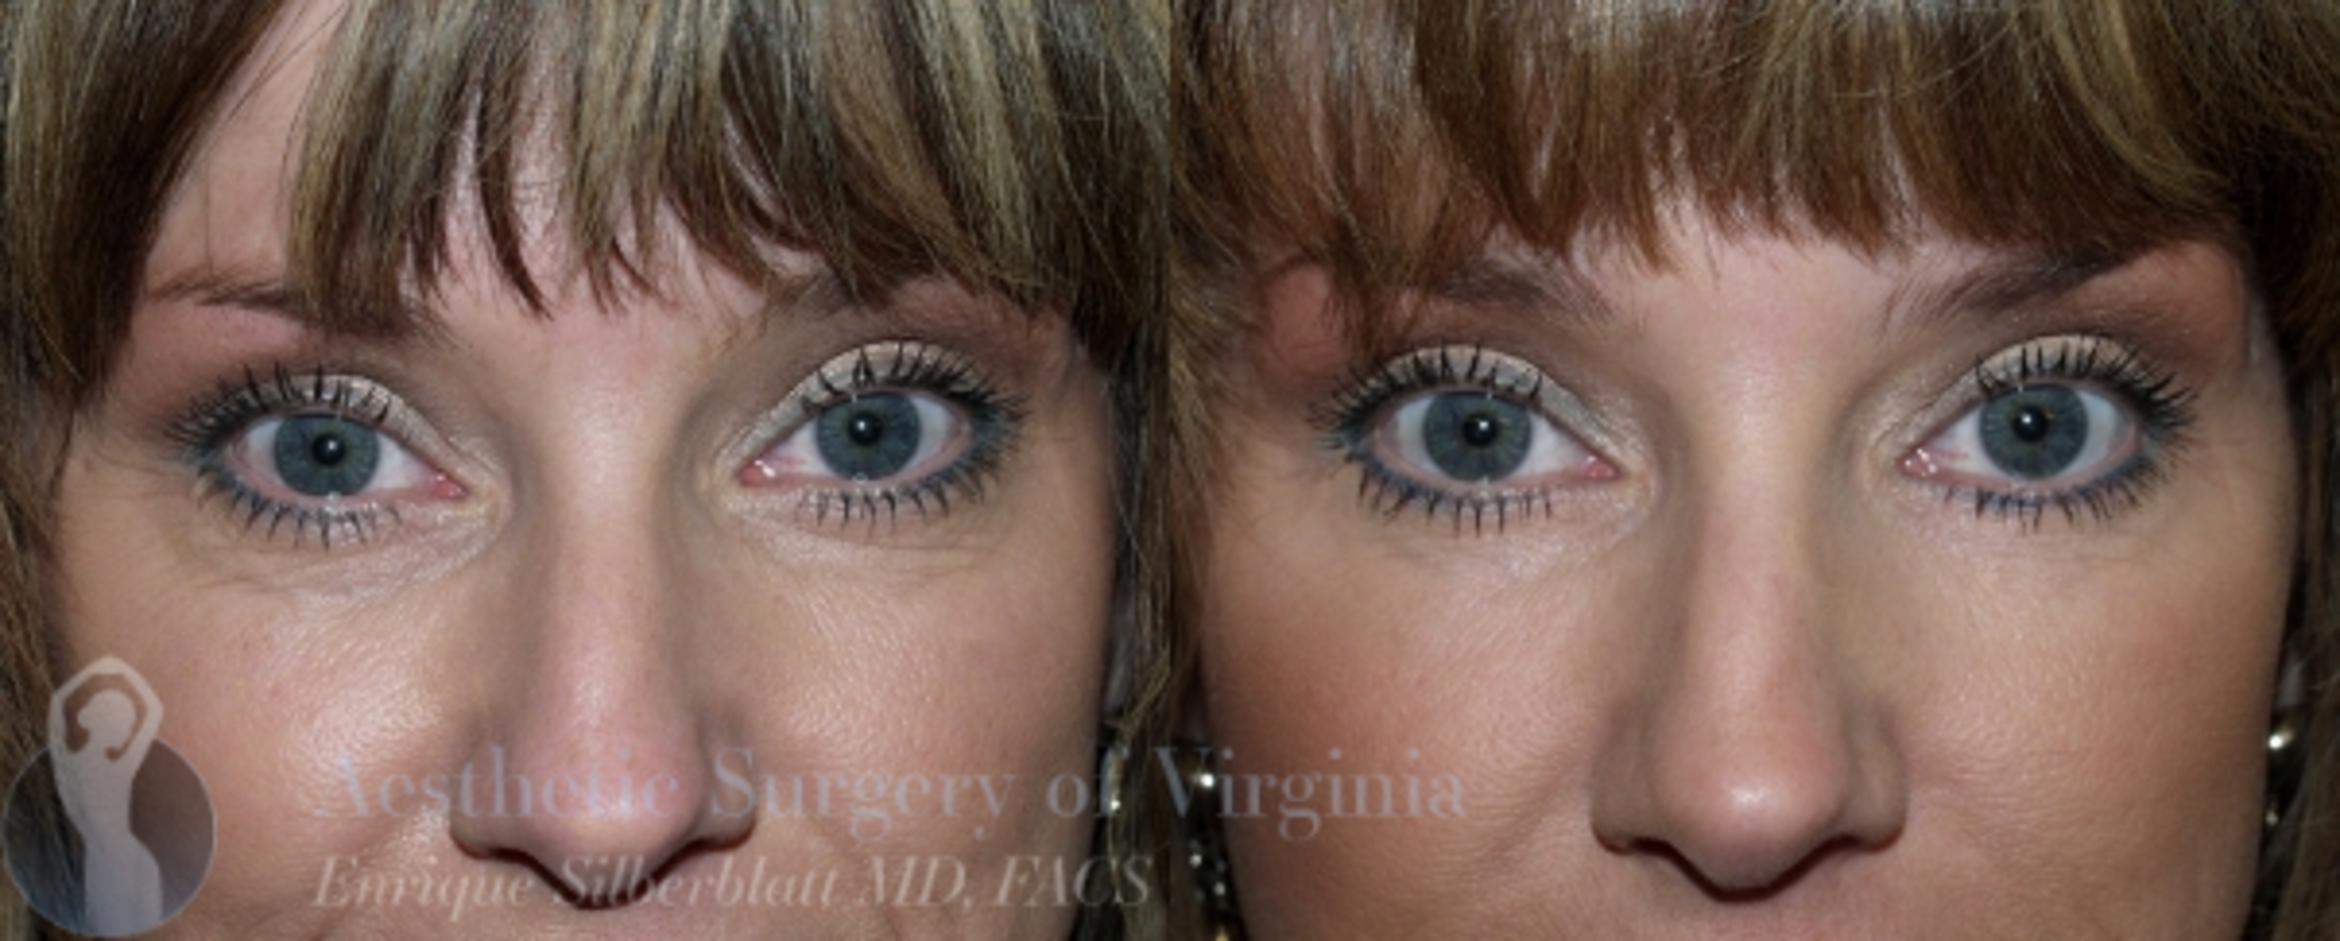 Eyelid Surgery Case 45 Before & After View #1 | Roanoke, VA | Aesthetic Surgery of Virginia: Enrique Silberblatt, MD